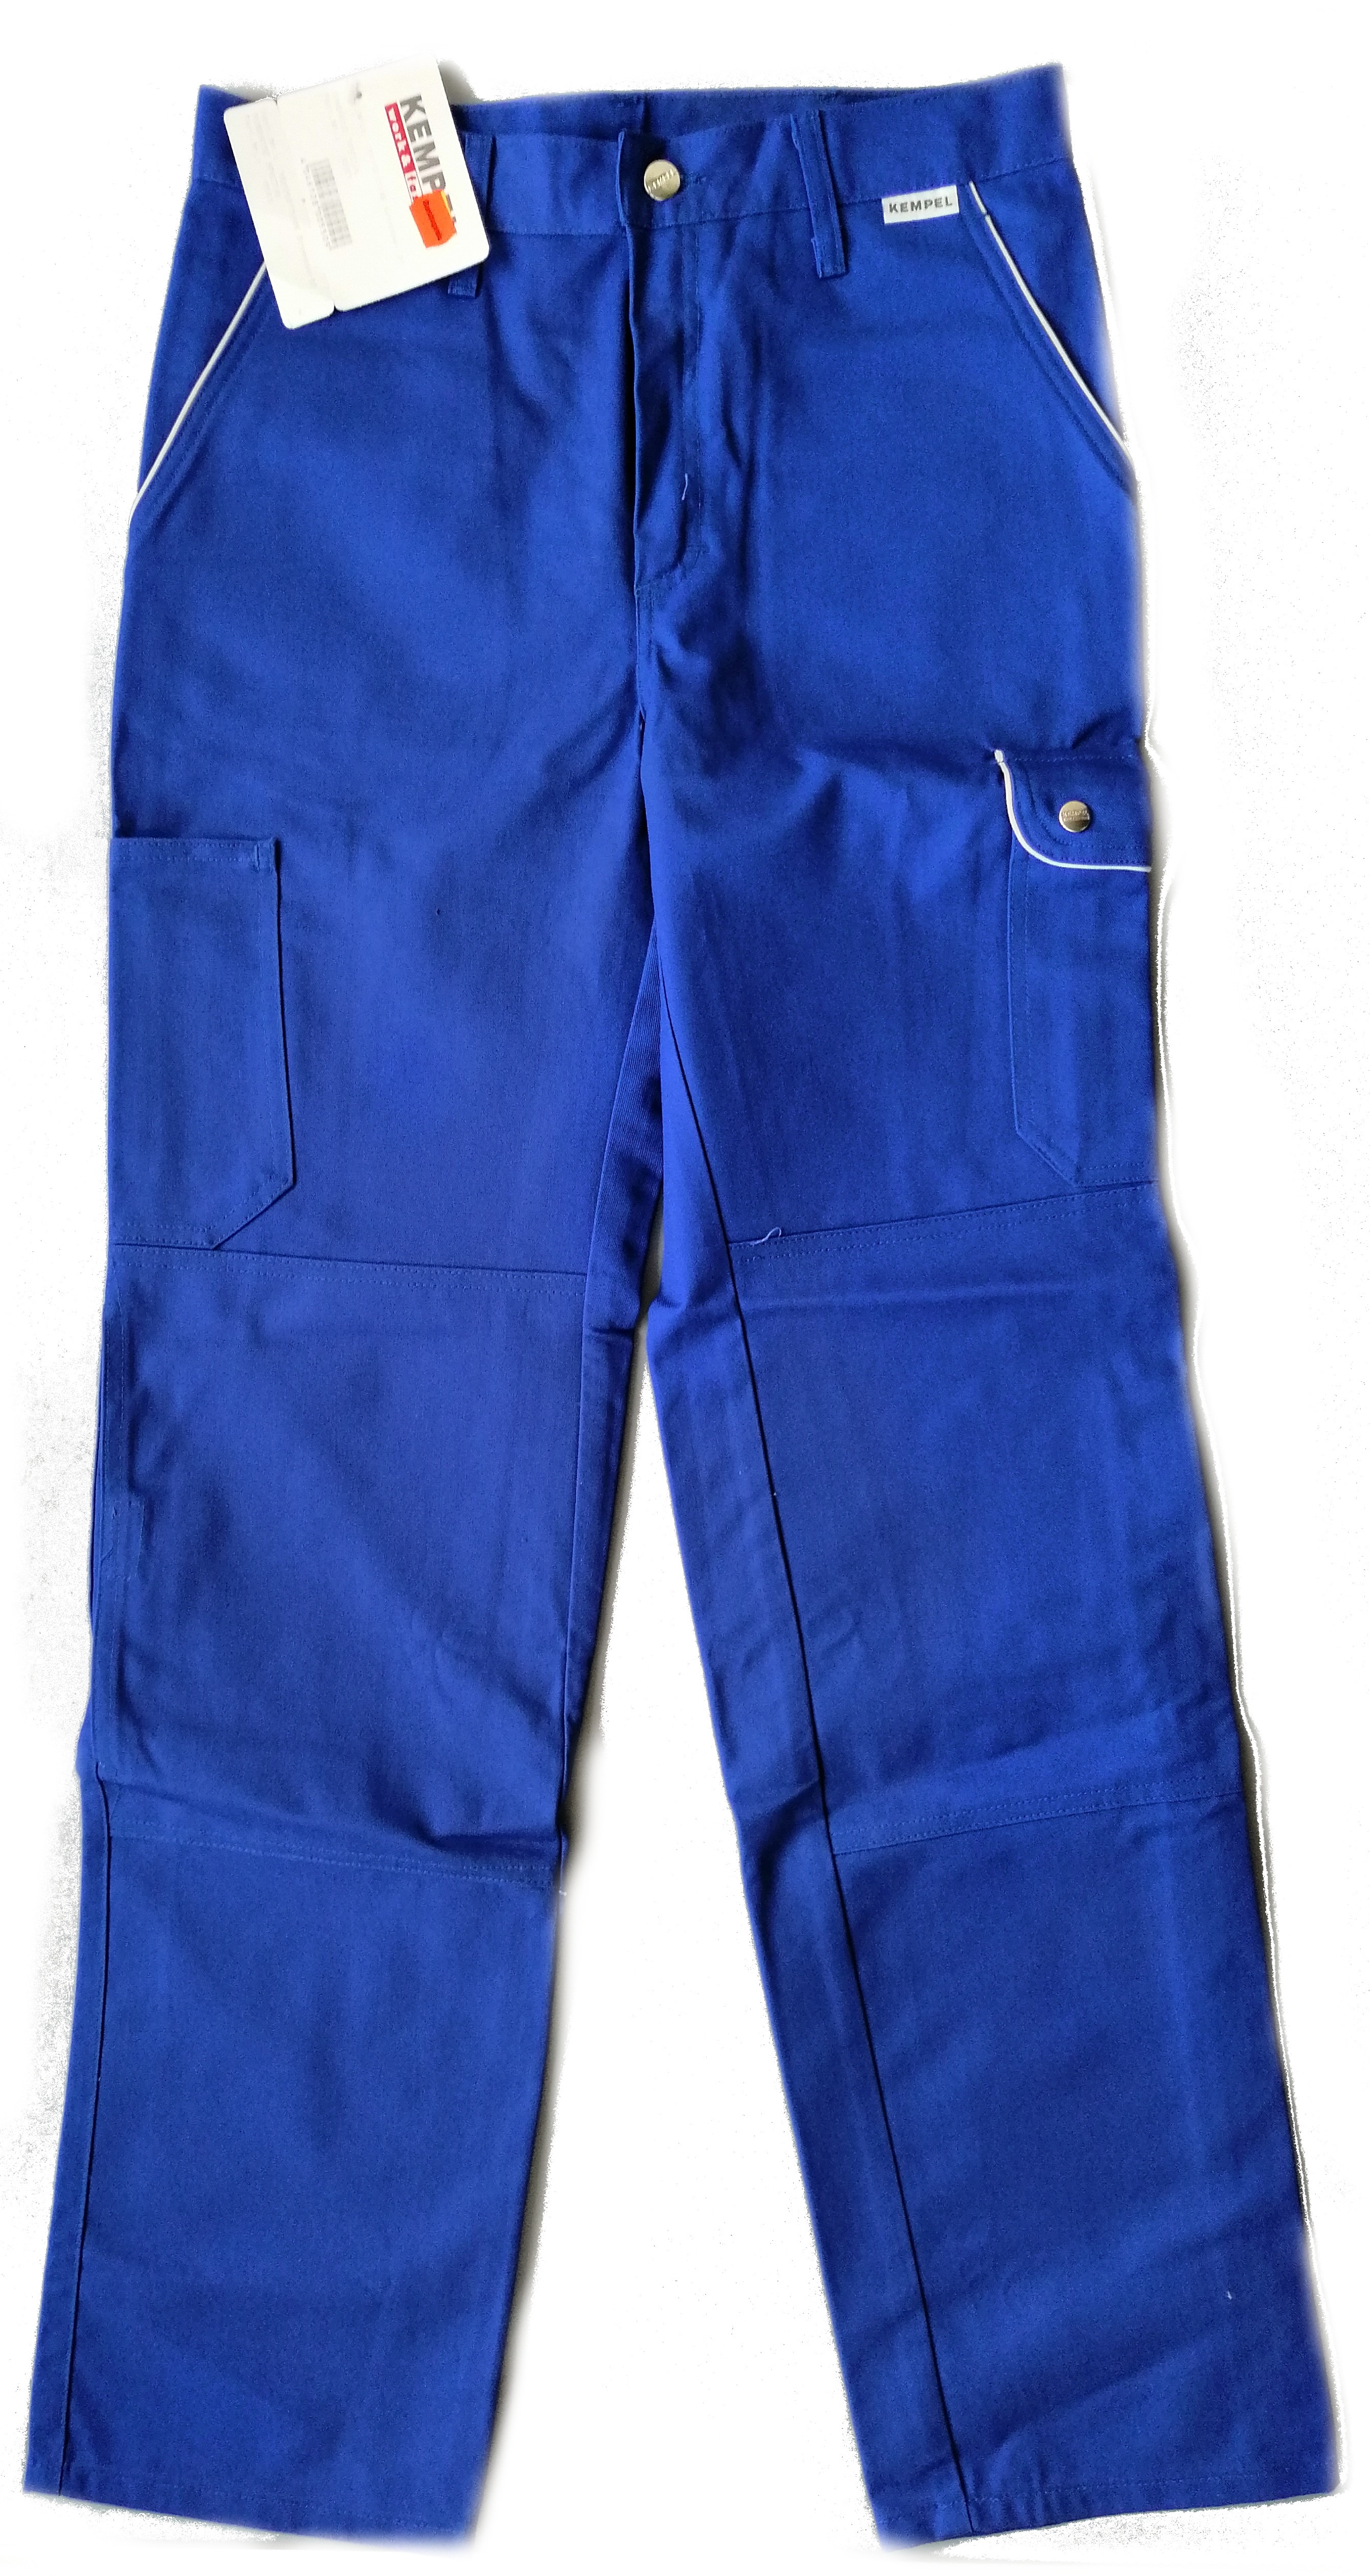 KEMPEL Bundhose Arbeitshose Berufshose Workerhose Arbeitskleidung Berufskleidung Spezial kornblau